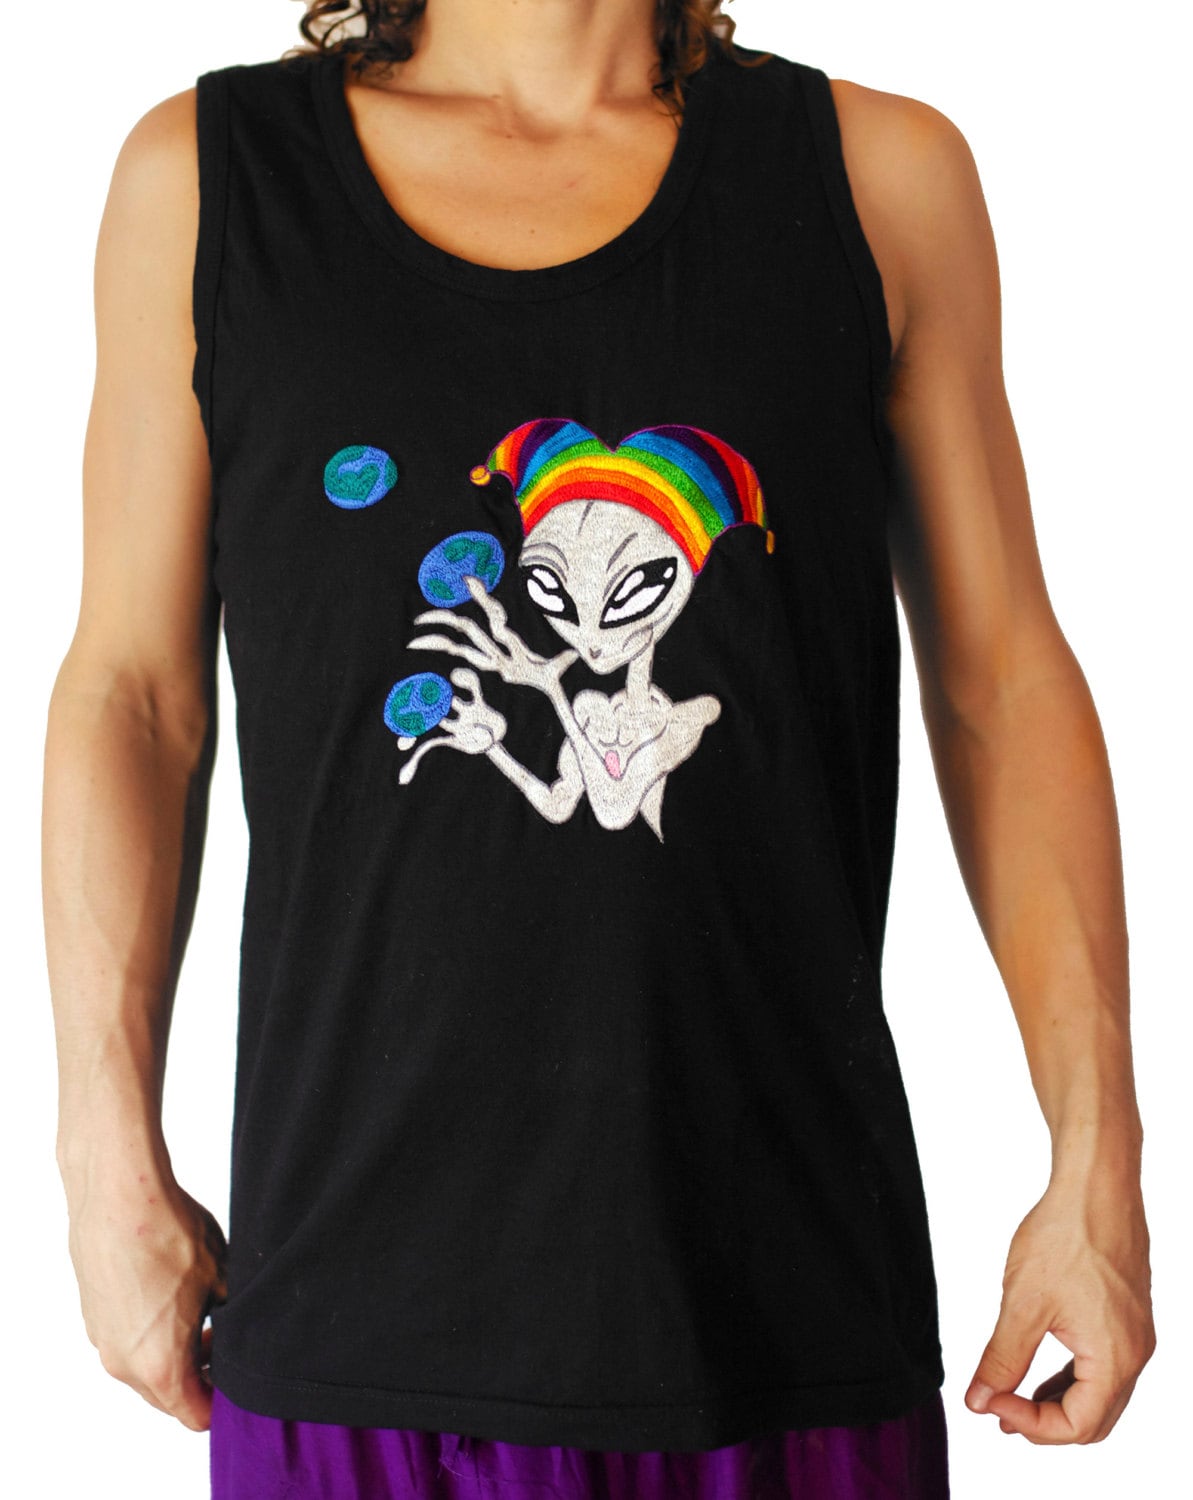 Cosmic Joker sleeveless shirt handmade embroidery no print goa alien